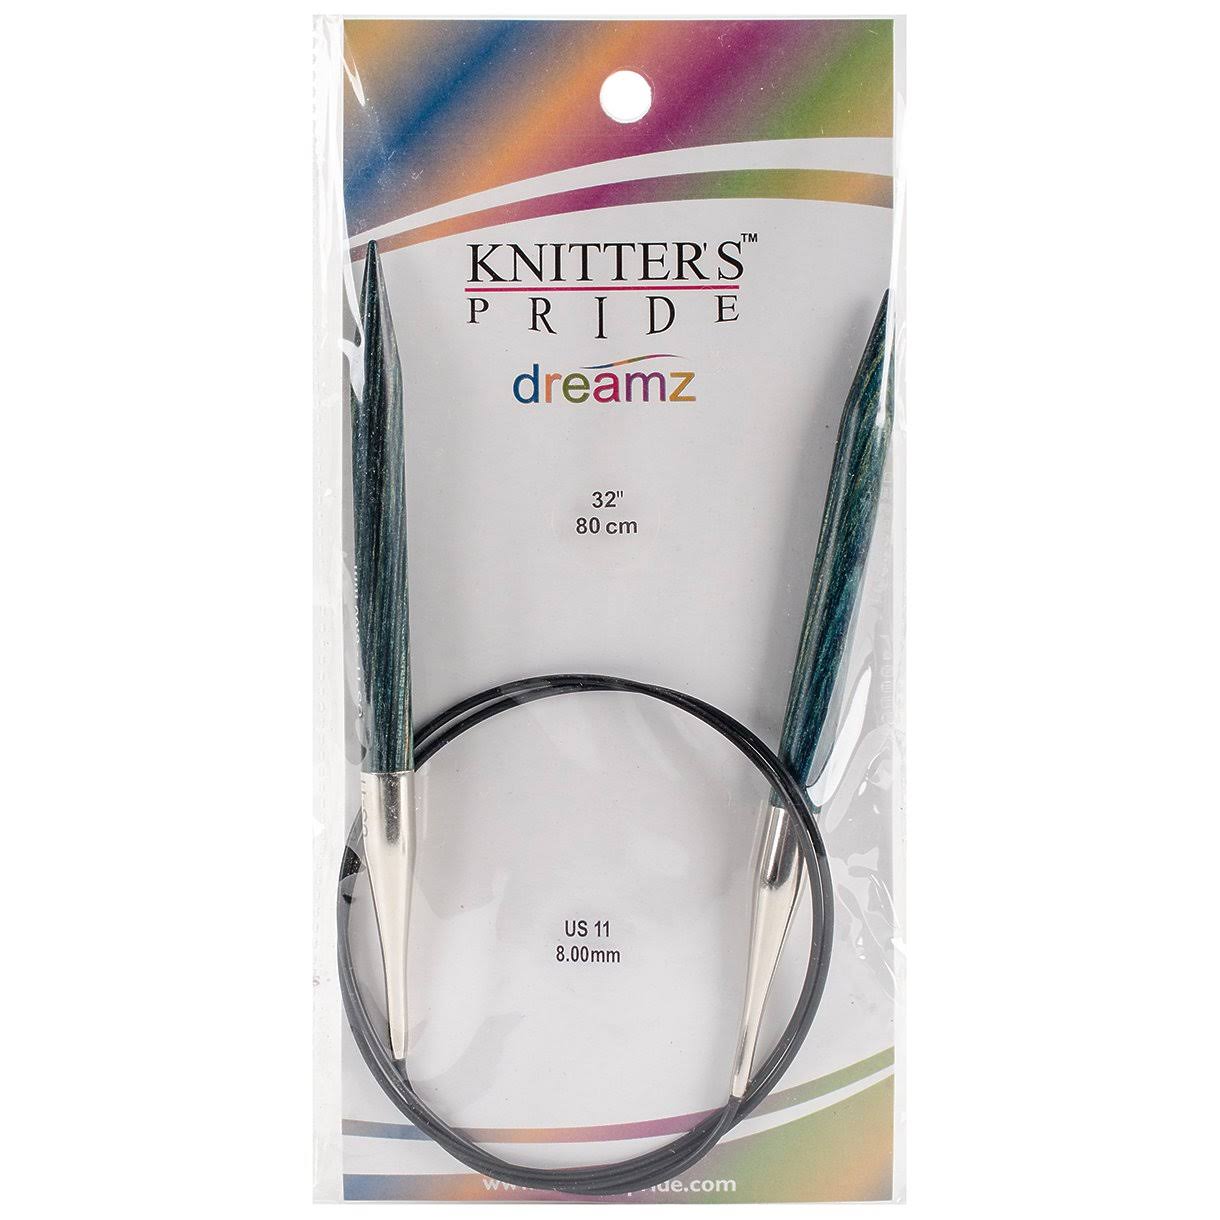 Knitters Pride Dreamz Circular Knitting Needles - 32", Size 11, 8mm